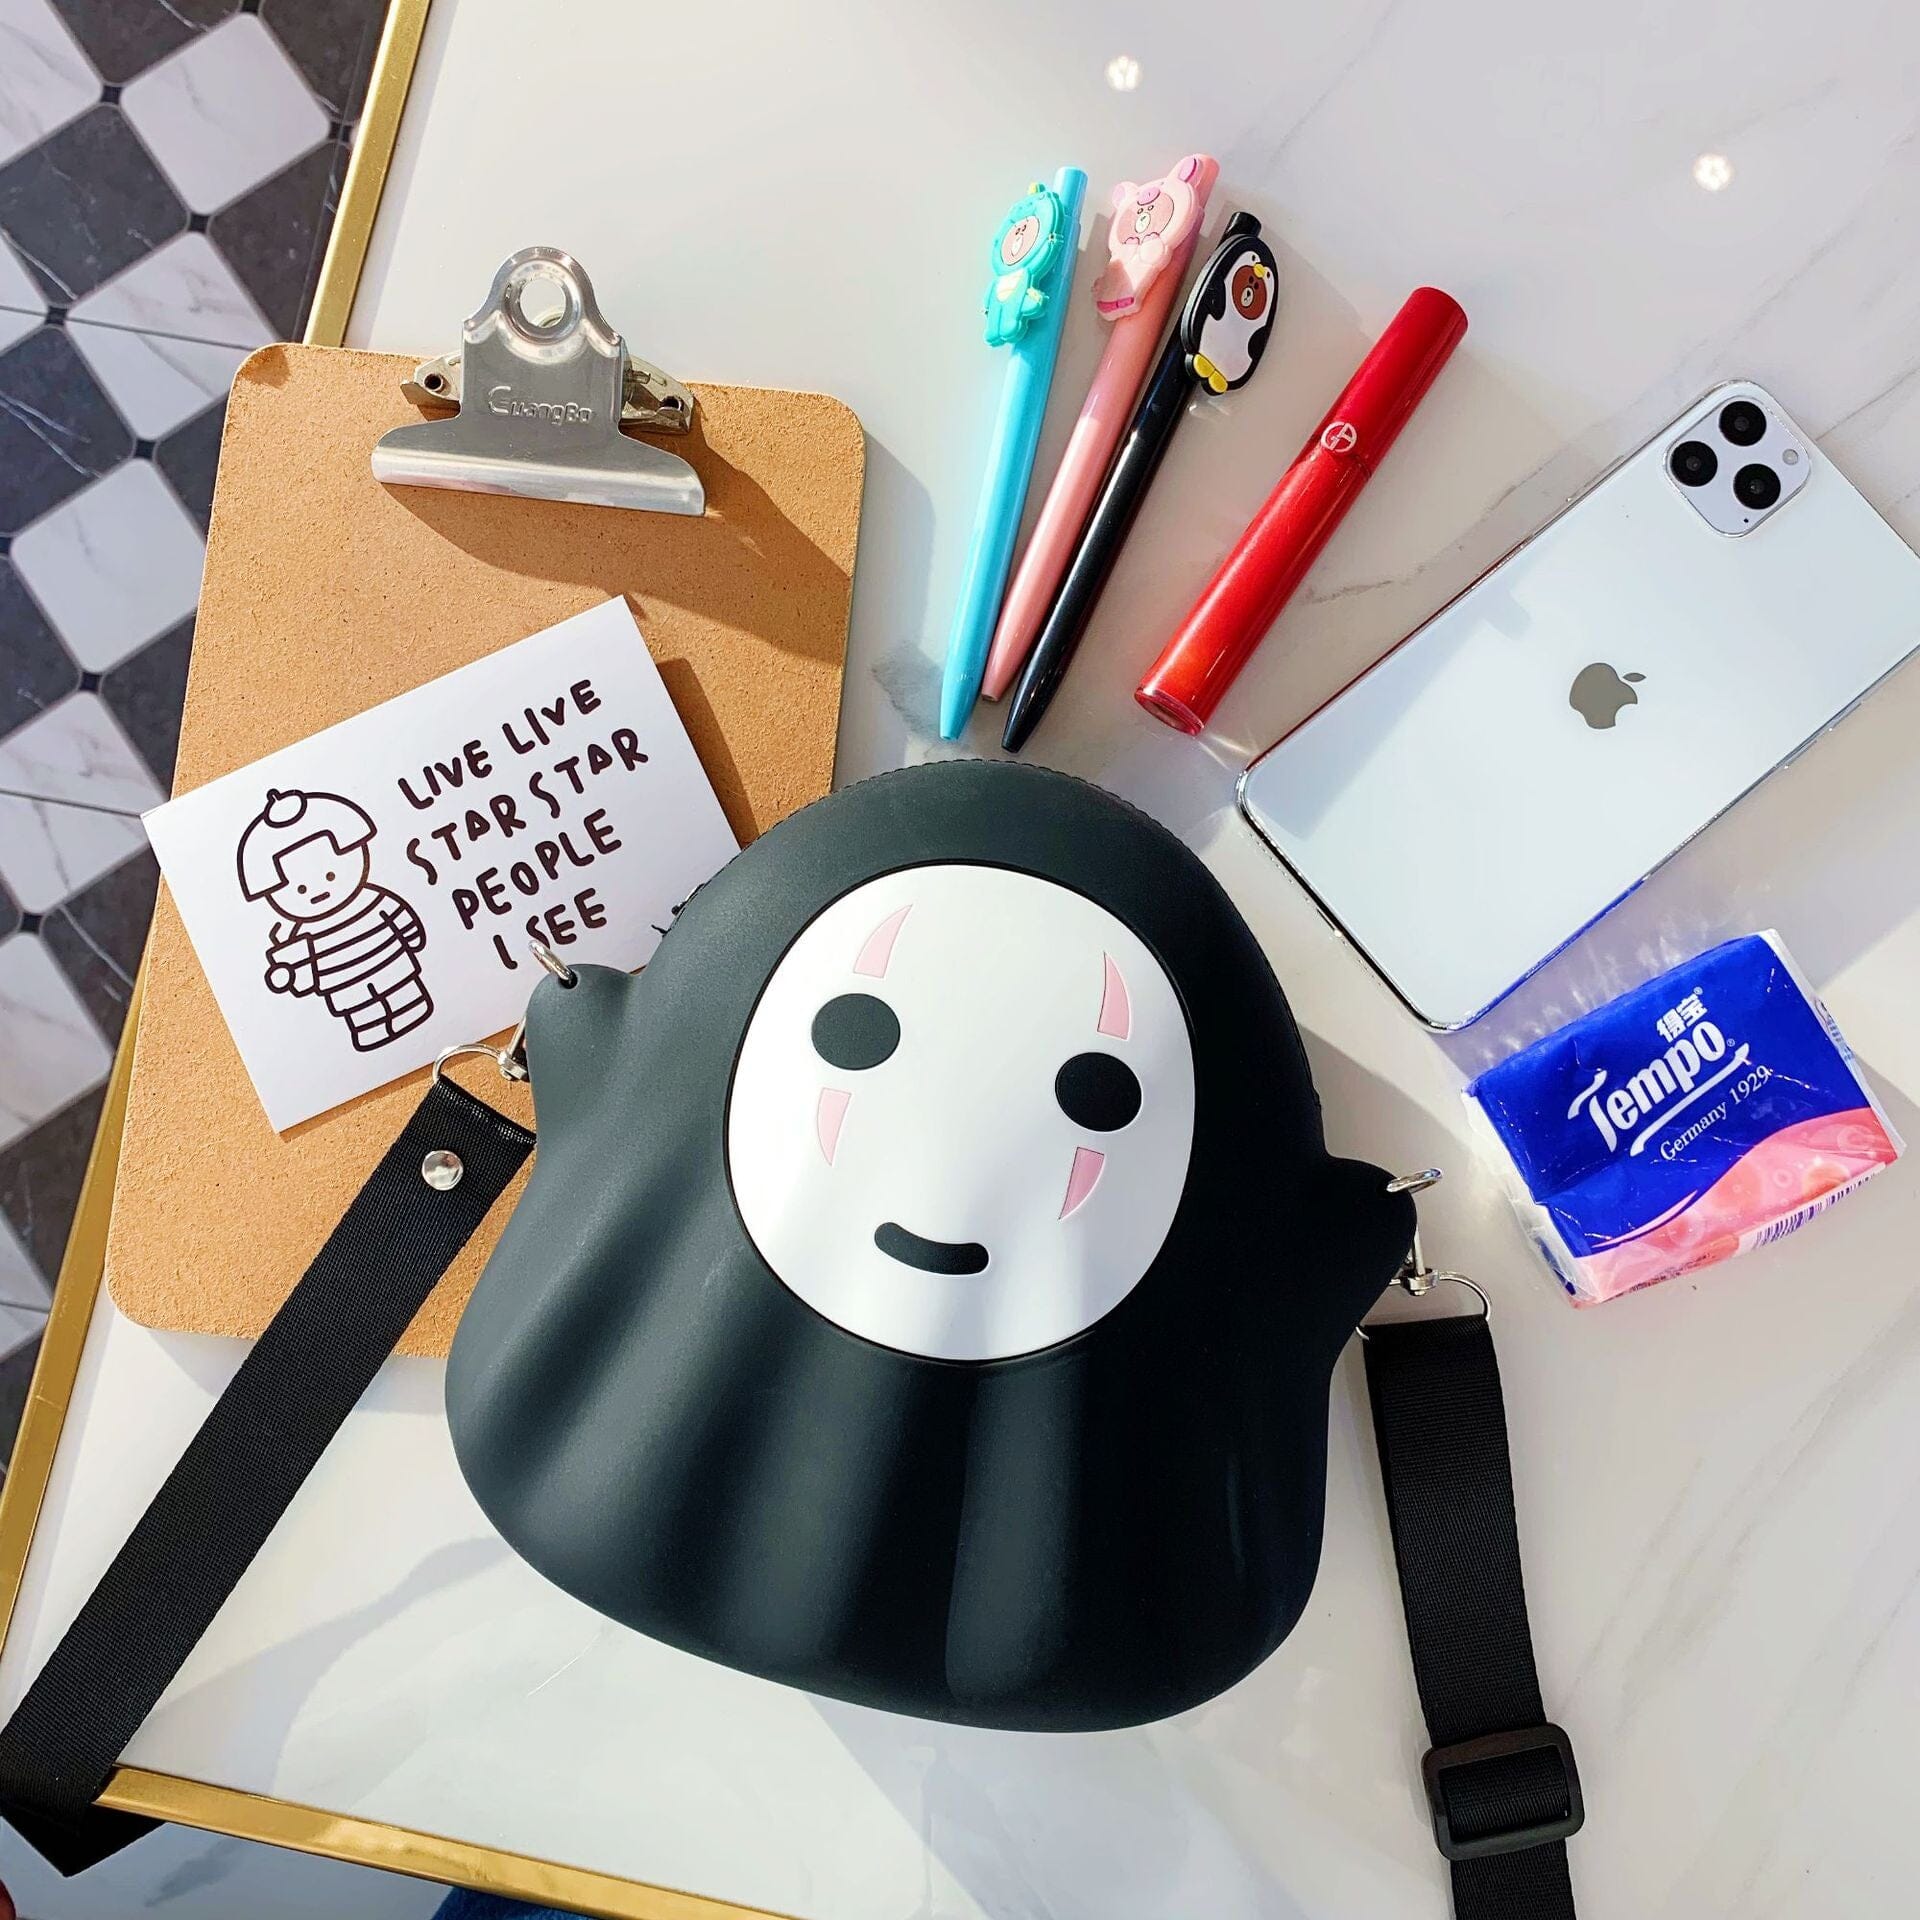 Studio Japan Anime Faceless Spirited Away Bag Toy No Face Man Figures Toy Bag Phone Bag Case for Daily Supplies Kid Gift 0 GatoGeek 